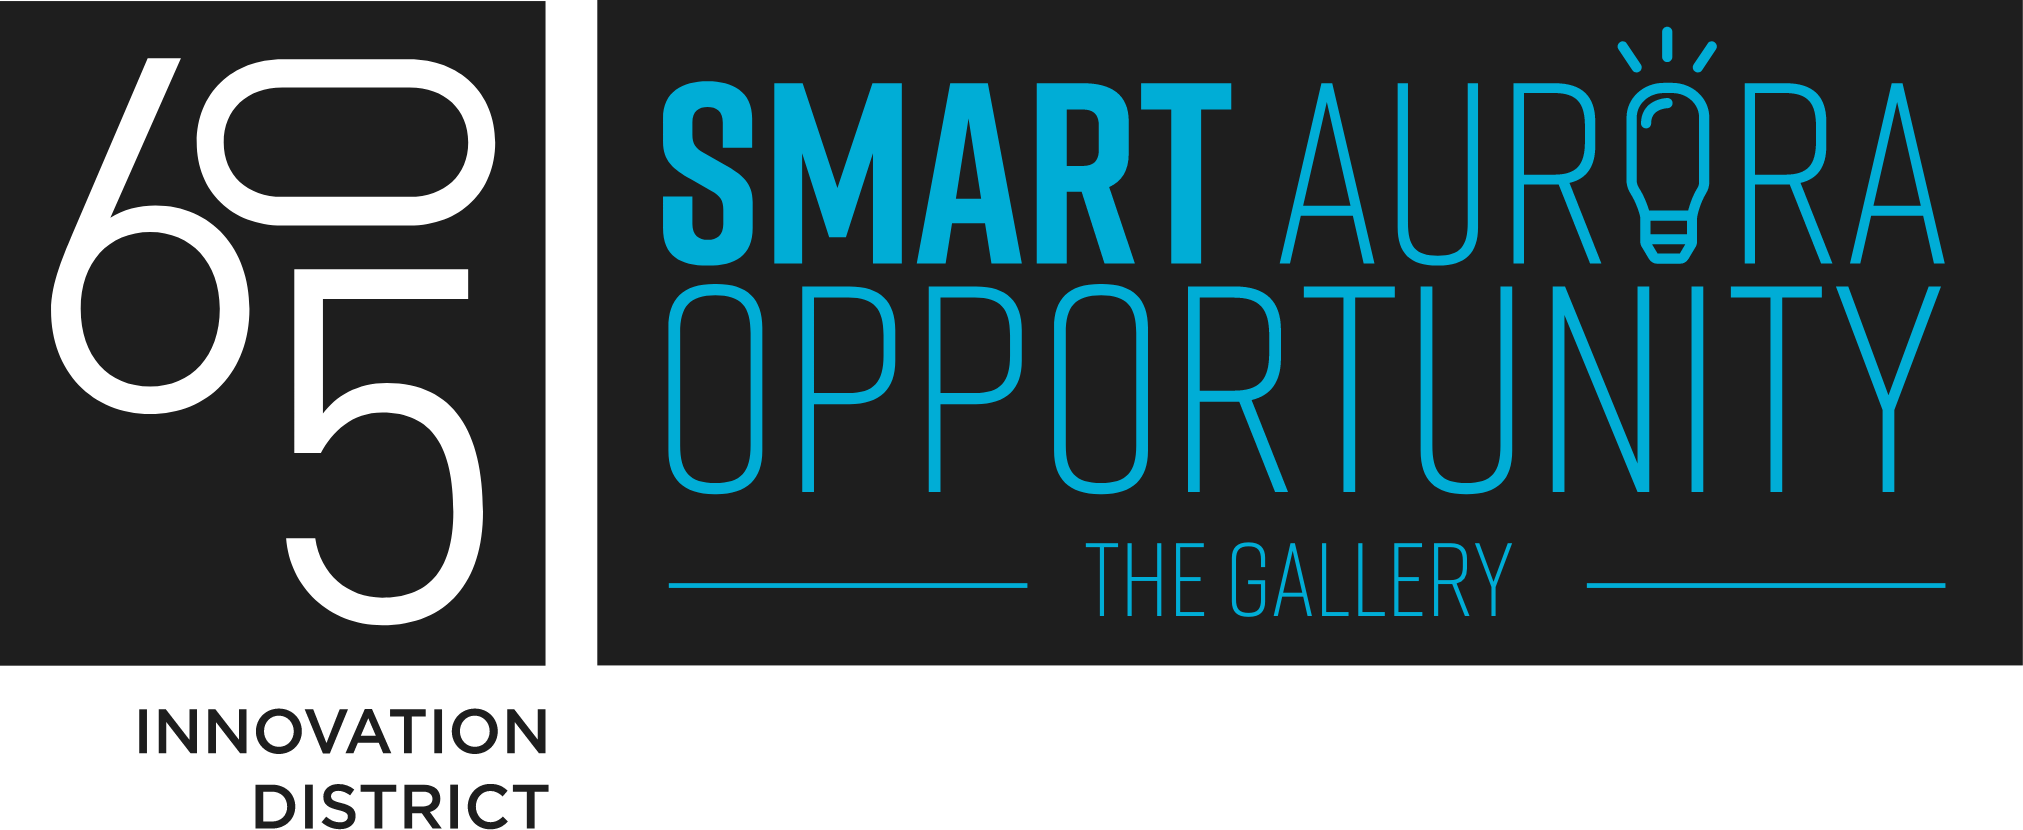 605 Innovation Smart Aurora Opportunity Gallery